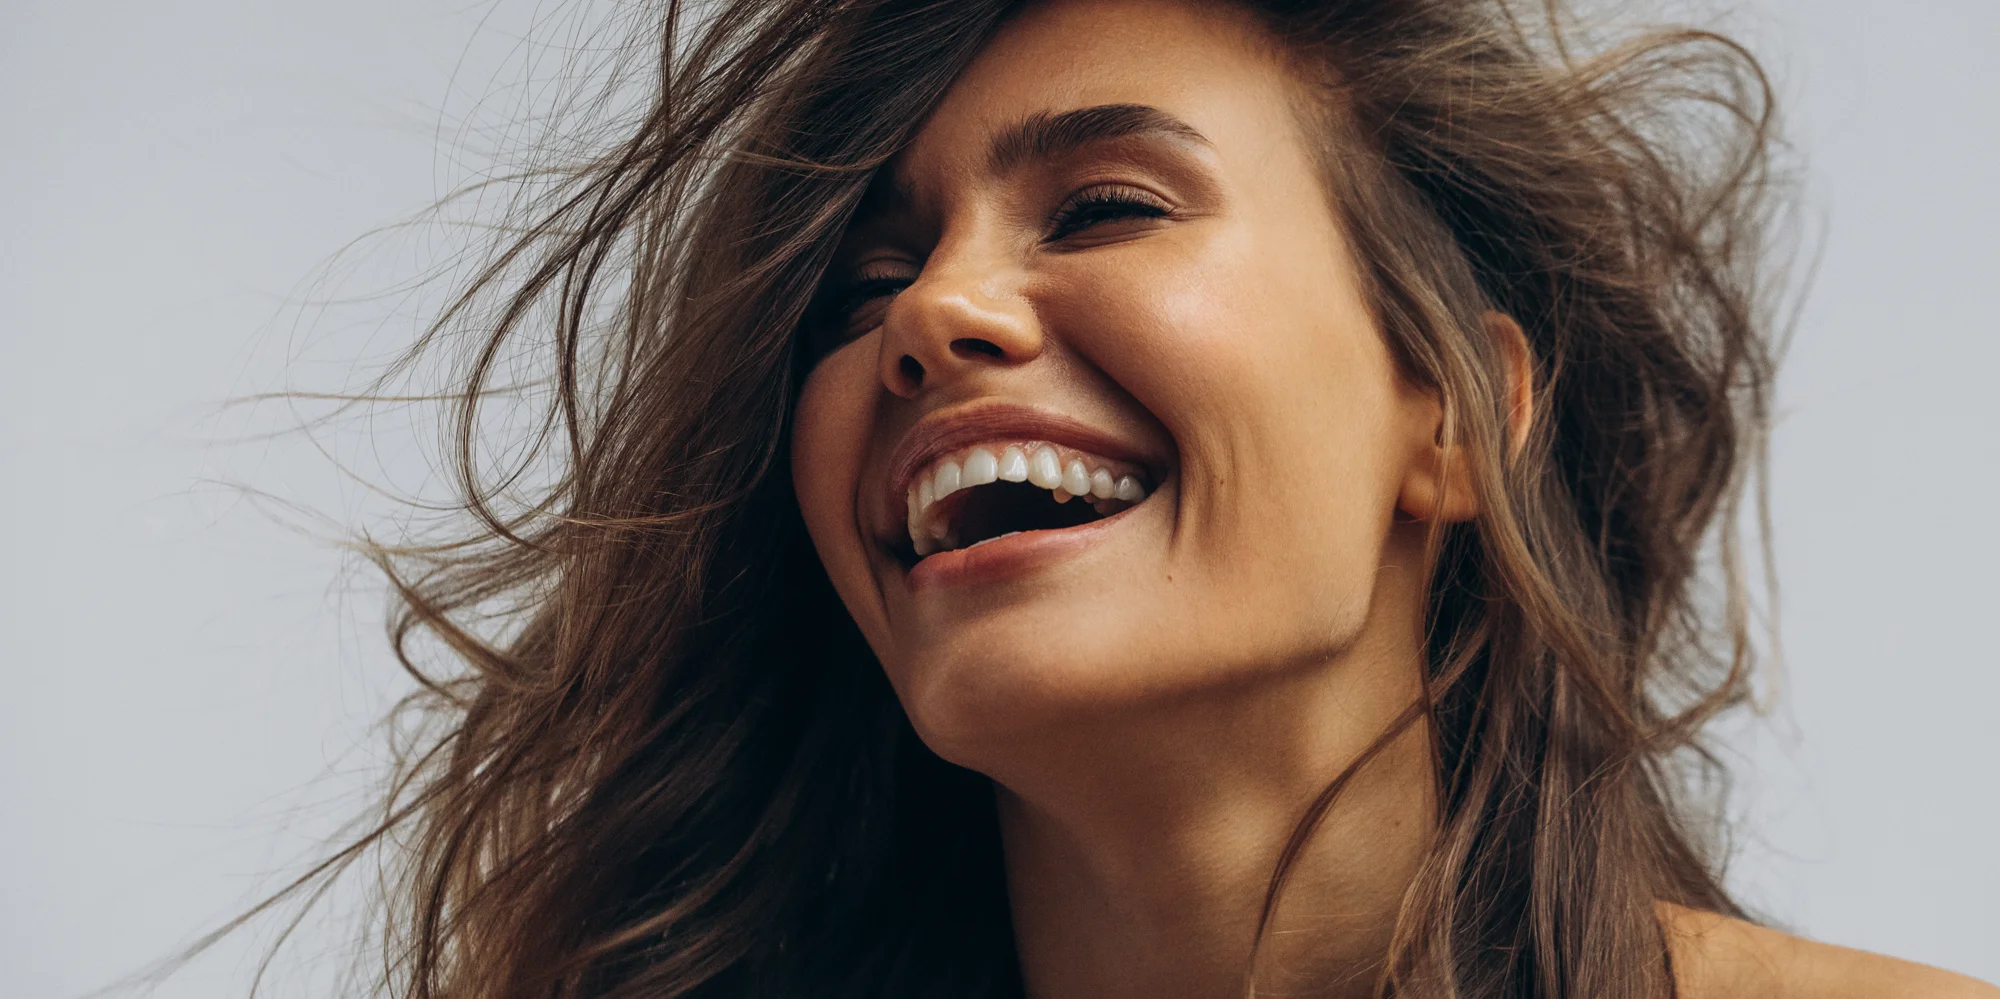 Woman smiling lauging